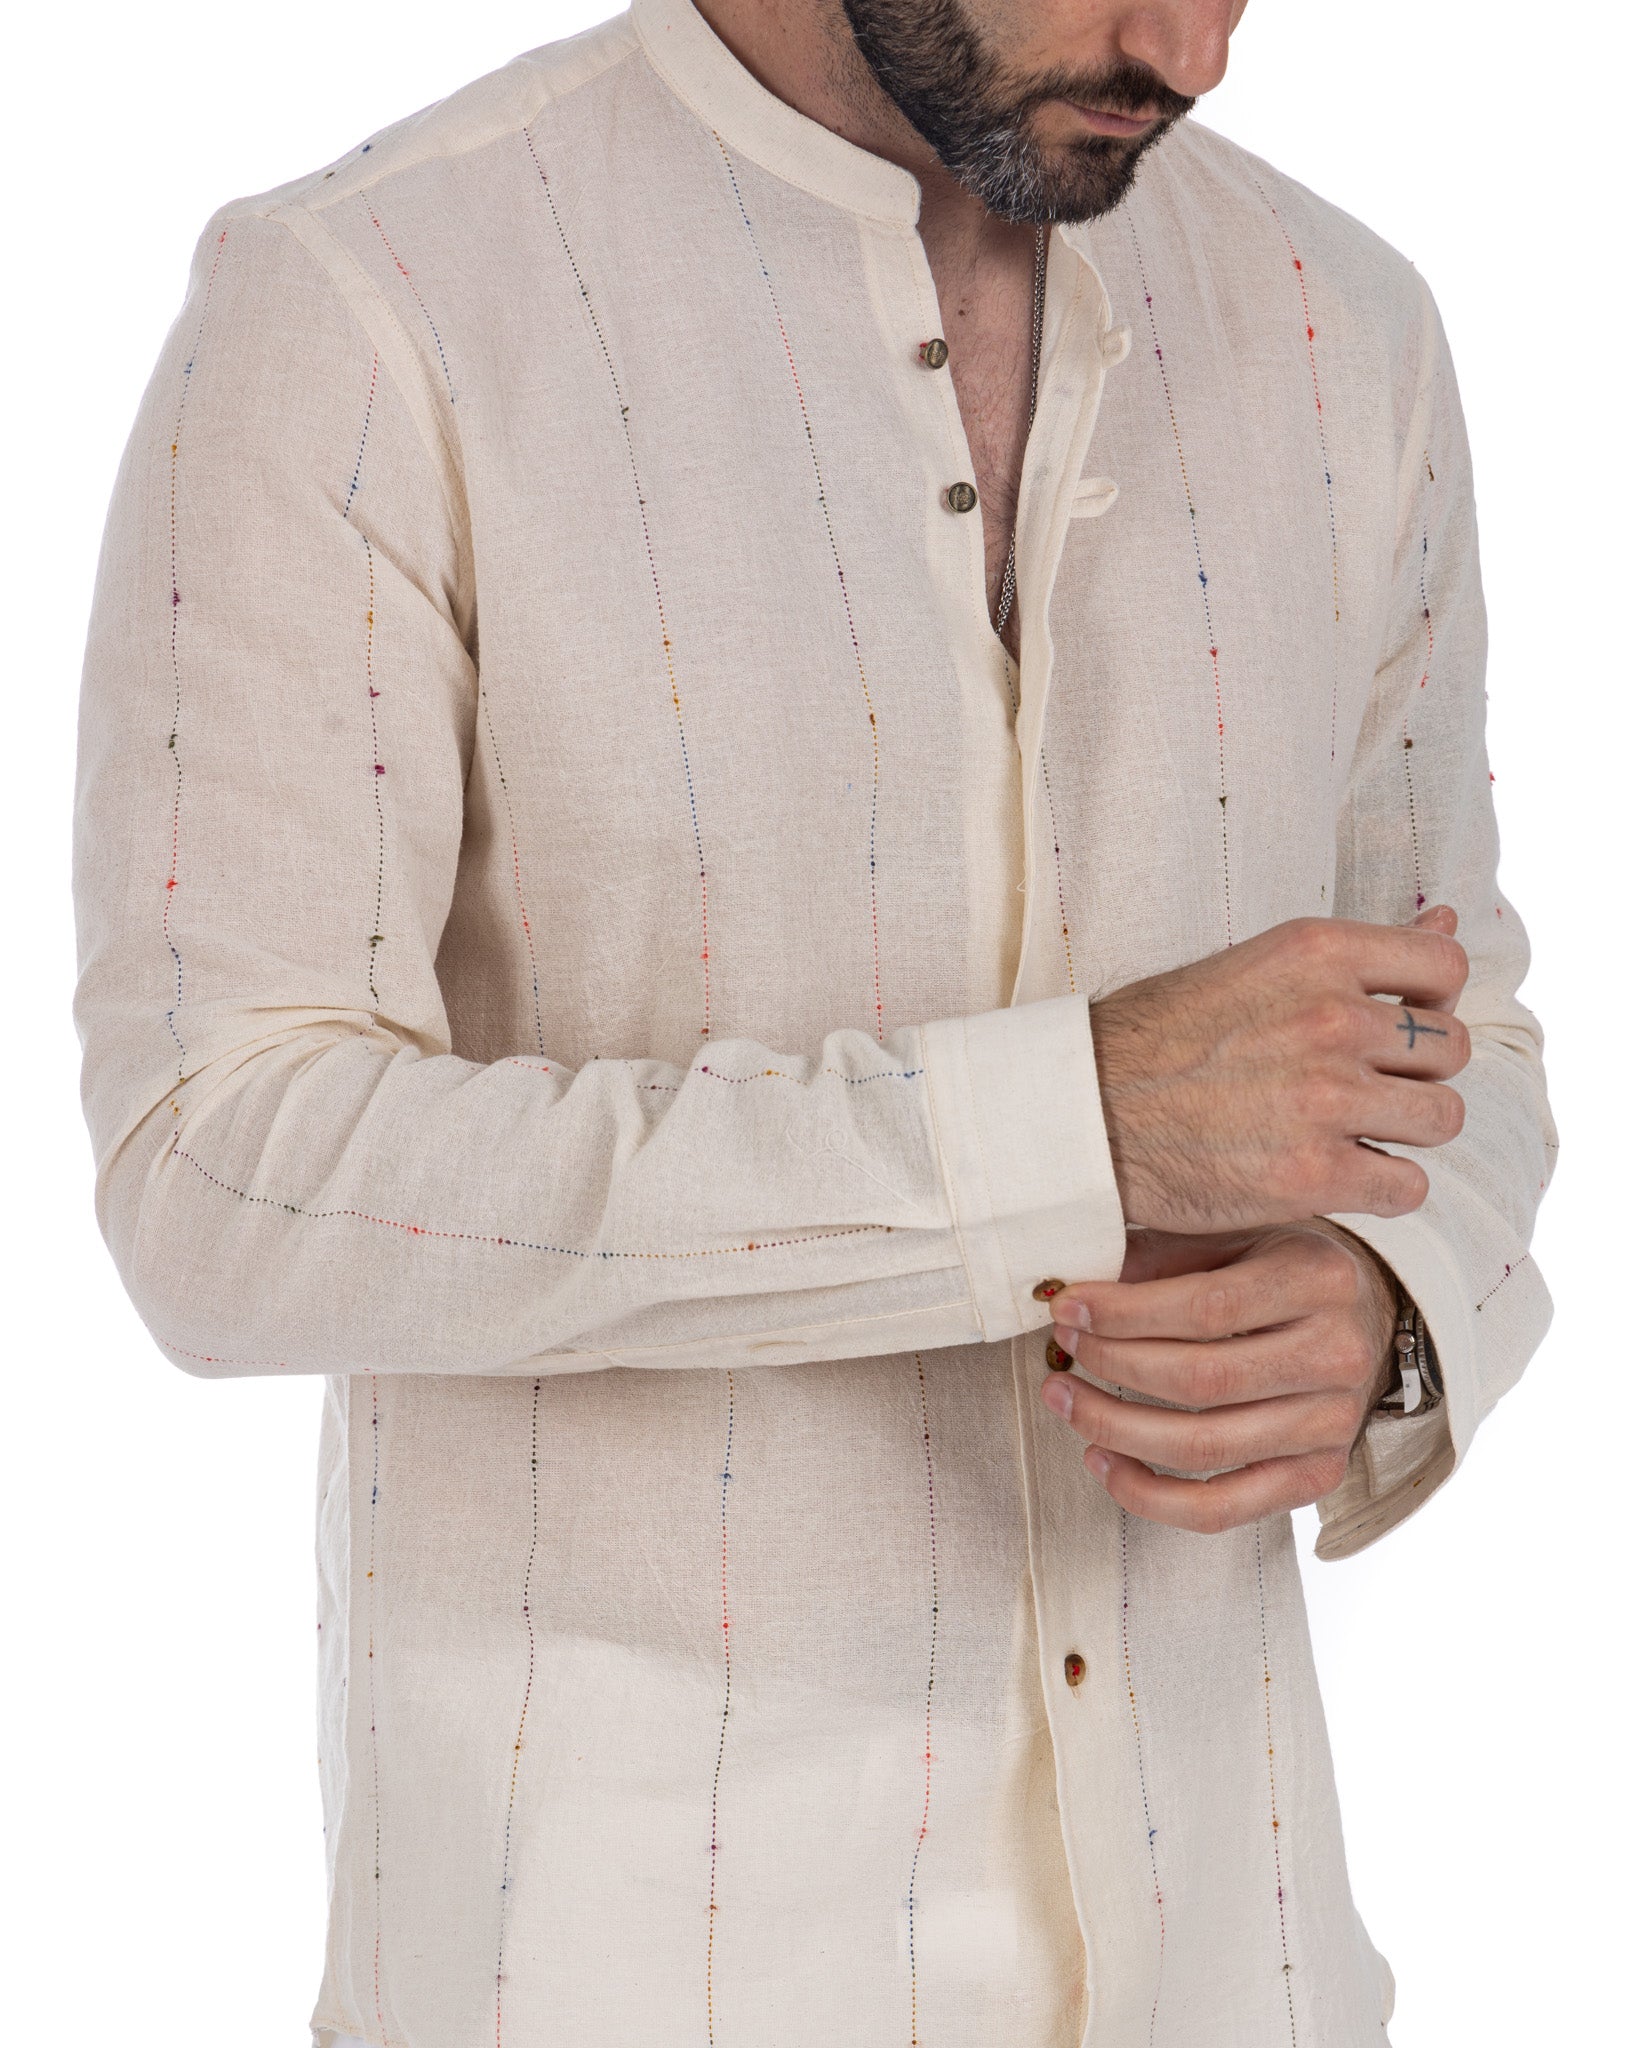 Iride - Korean shirt with beige relief stripes